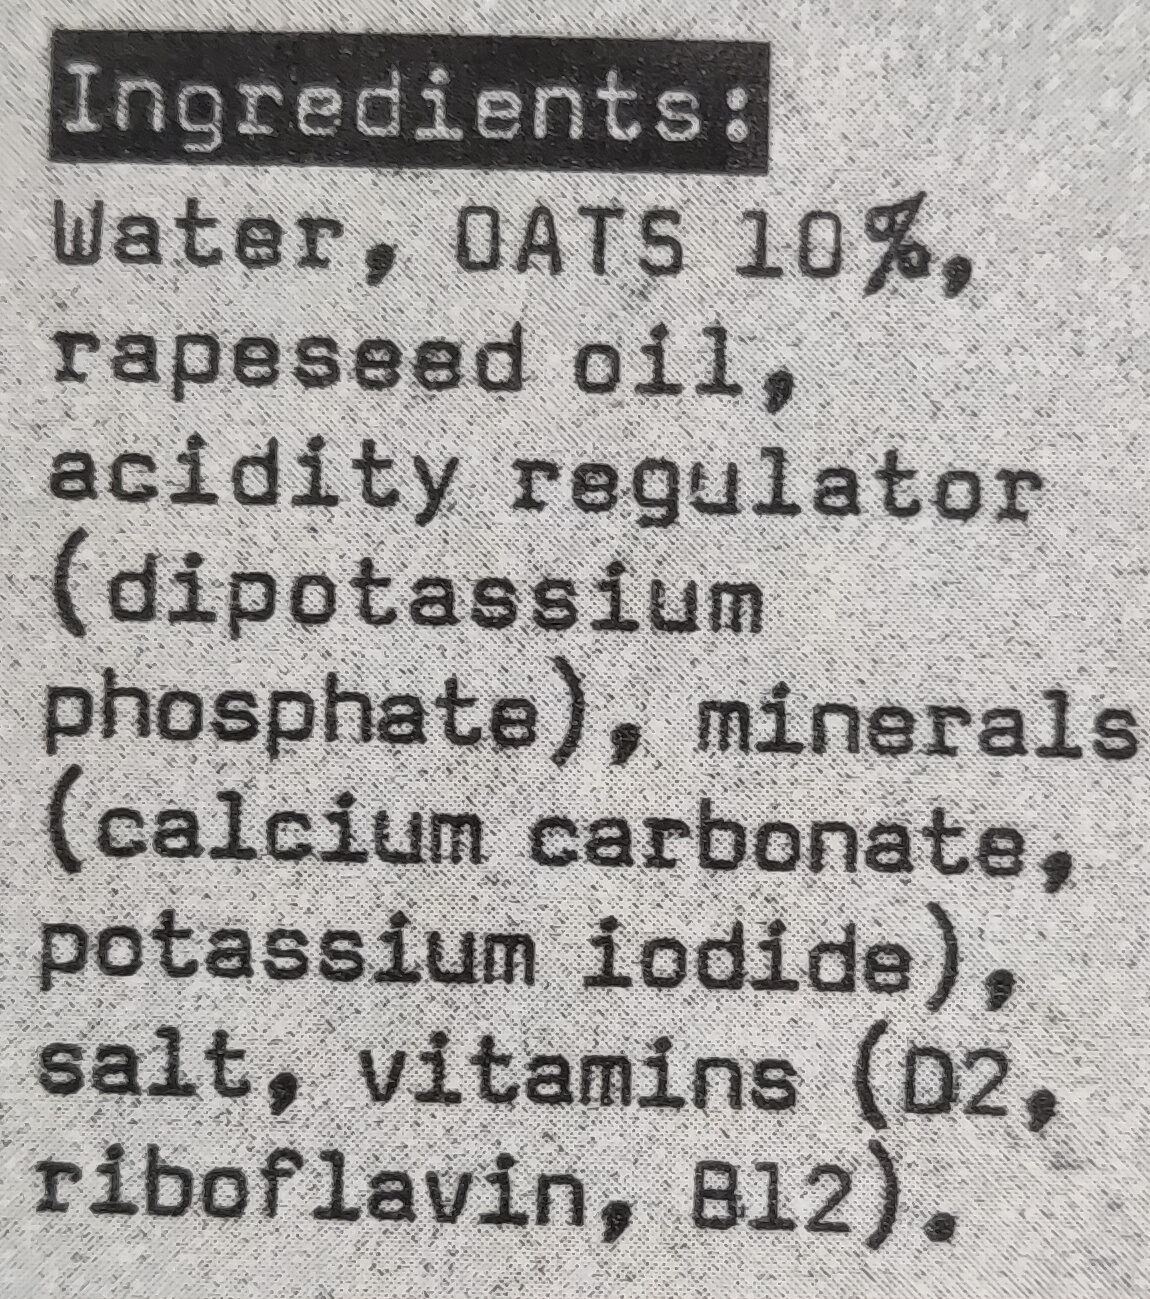 Barista edition oat drink - Ingredients